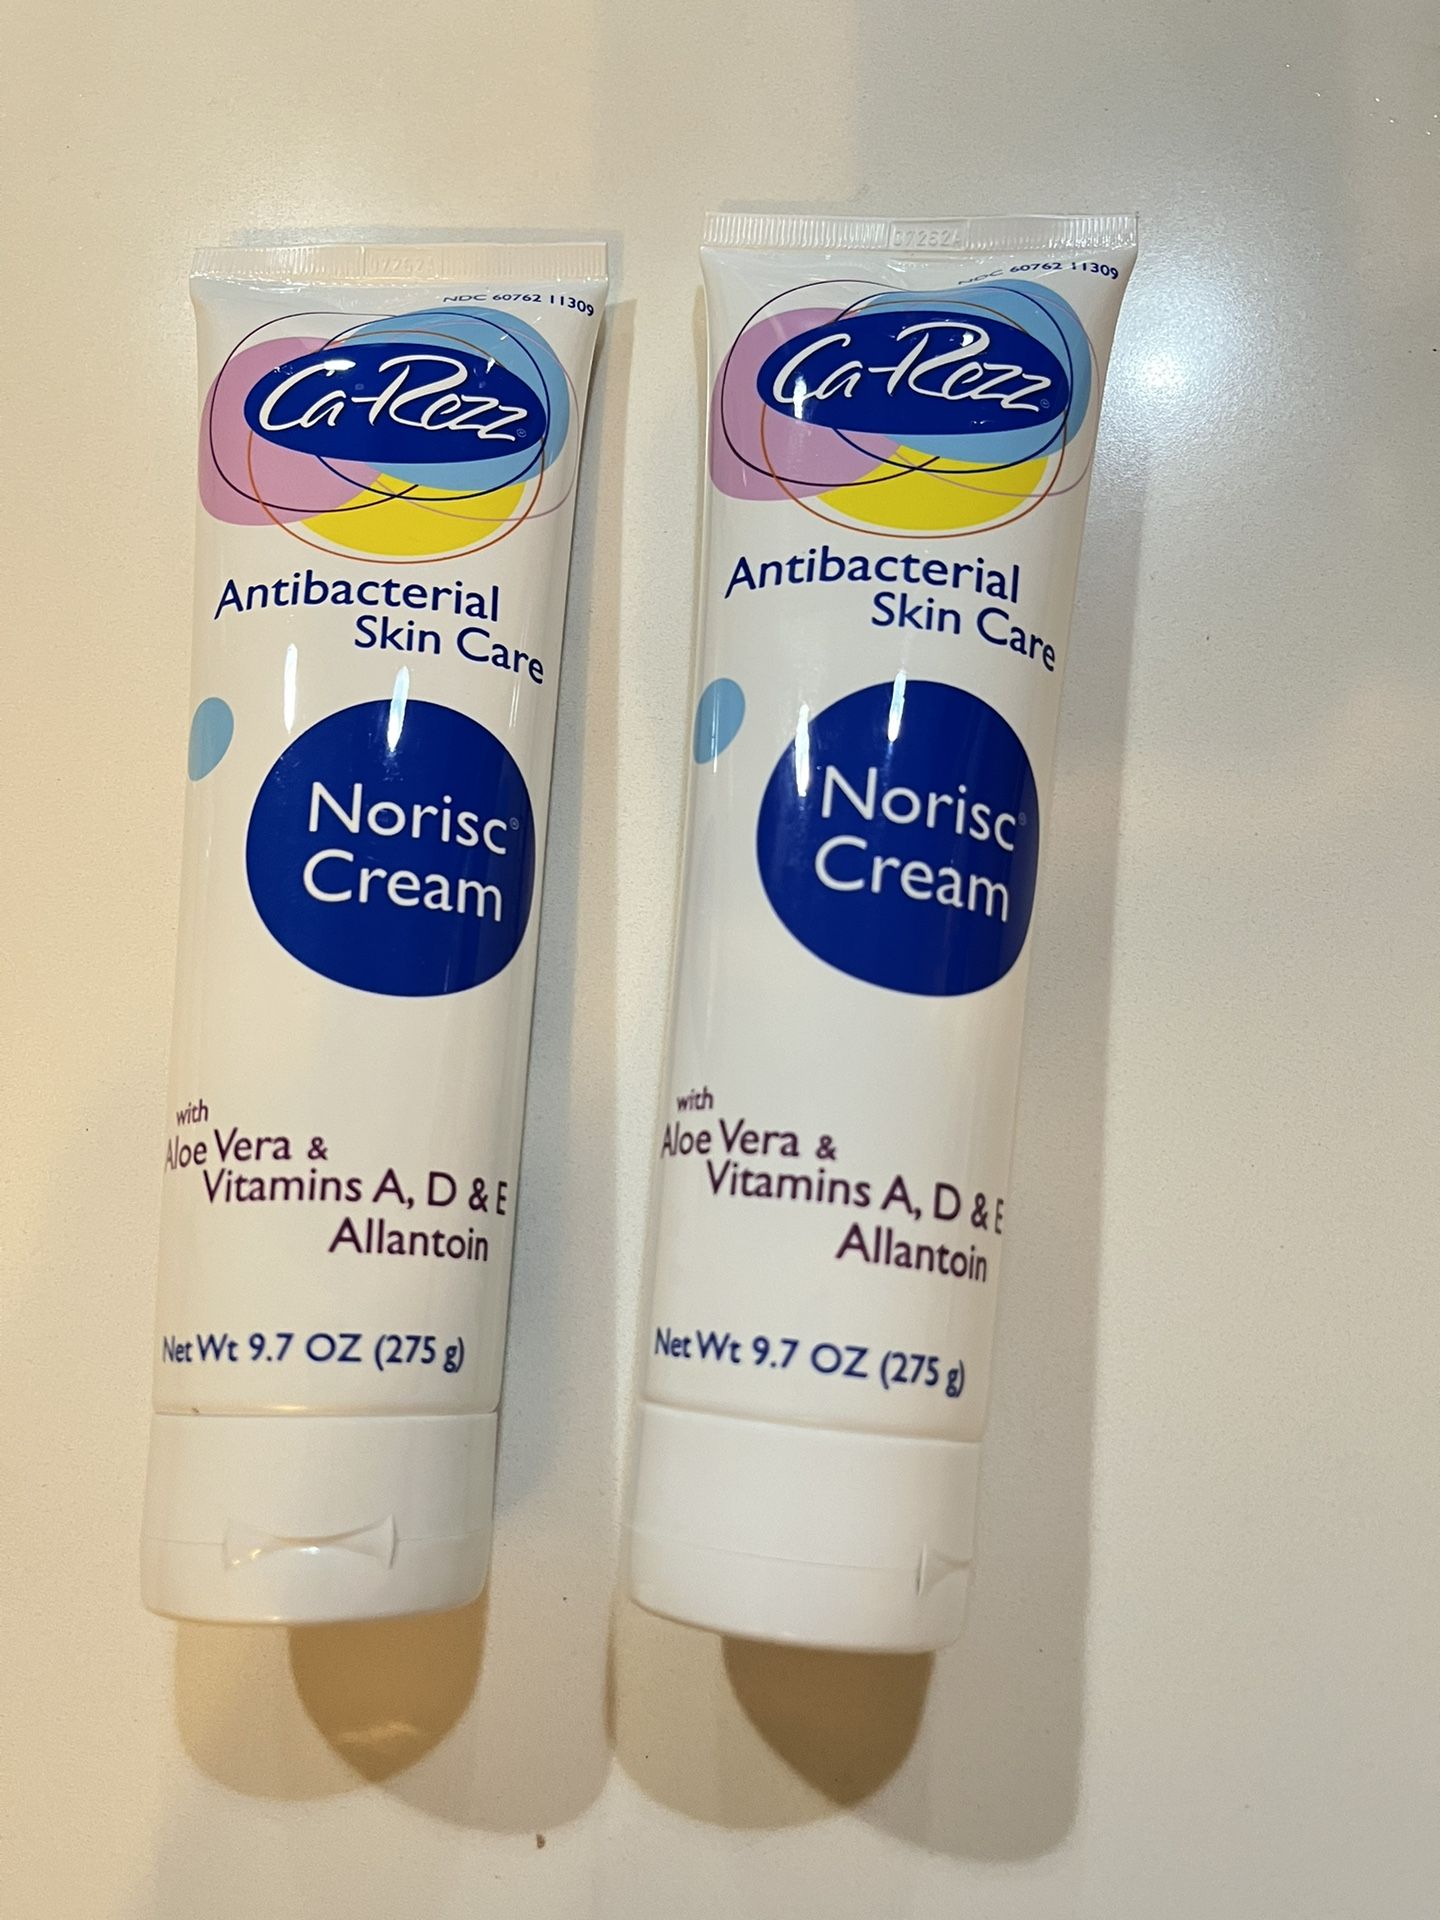 Ca-Rezz Antibacterial Skin Care Norisc Cream-9.7 oz lot pack of 2.    New - Sealed